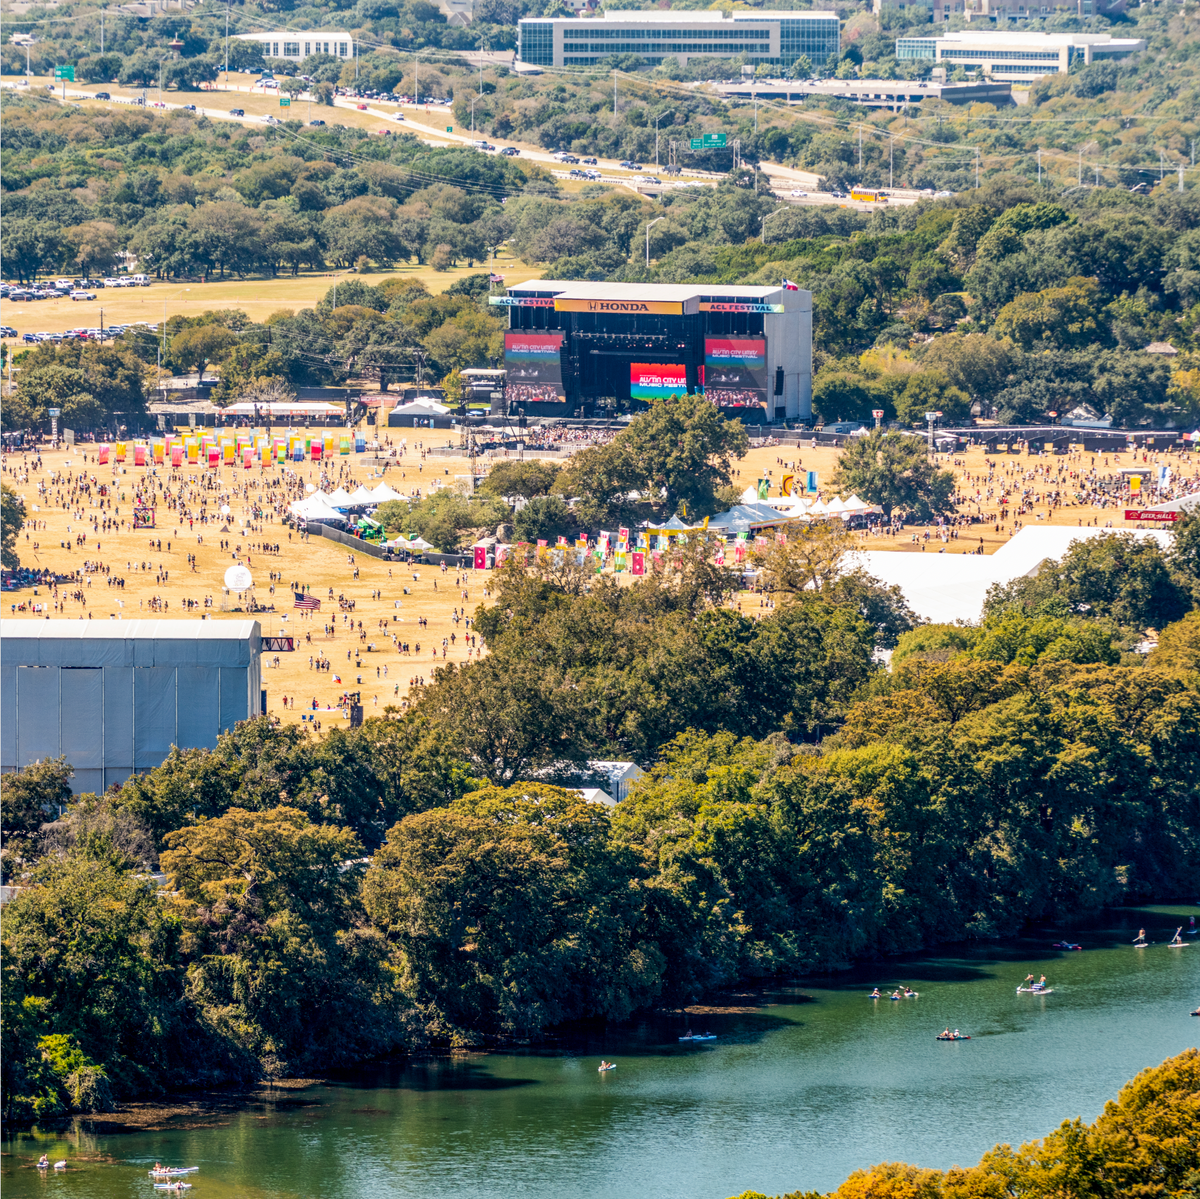 Festival goers enjoy a beautiful day at Austin City Limits